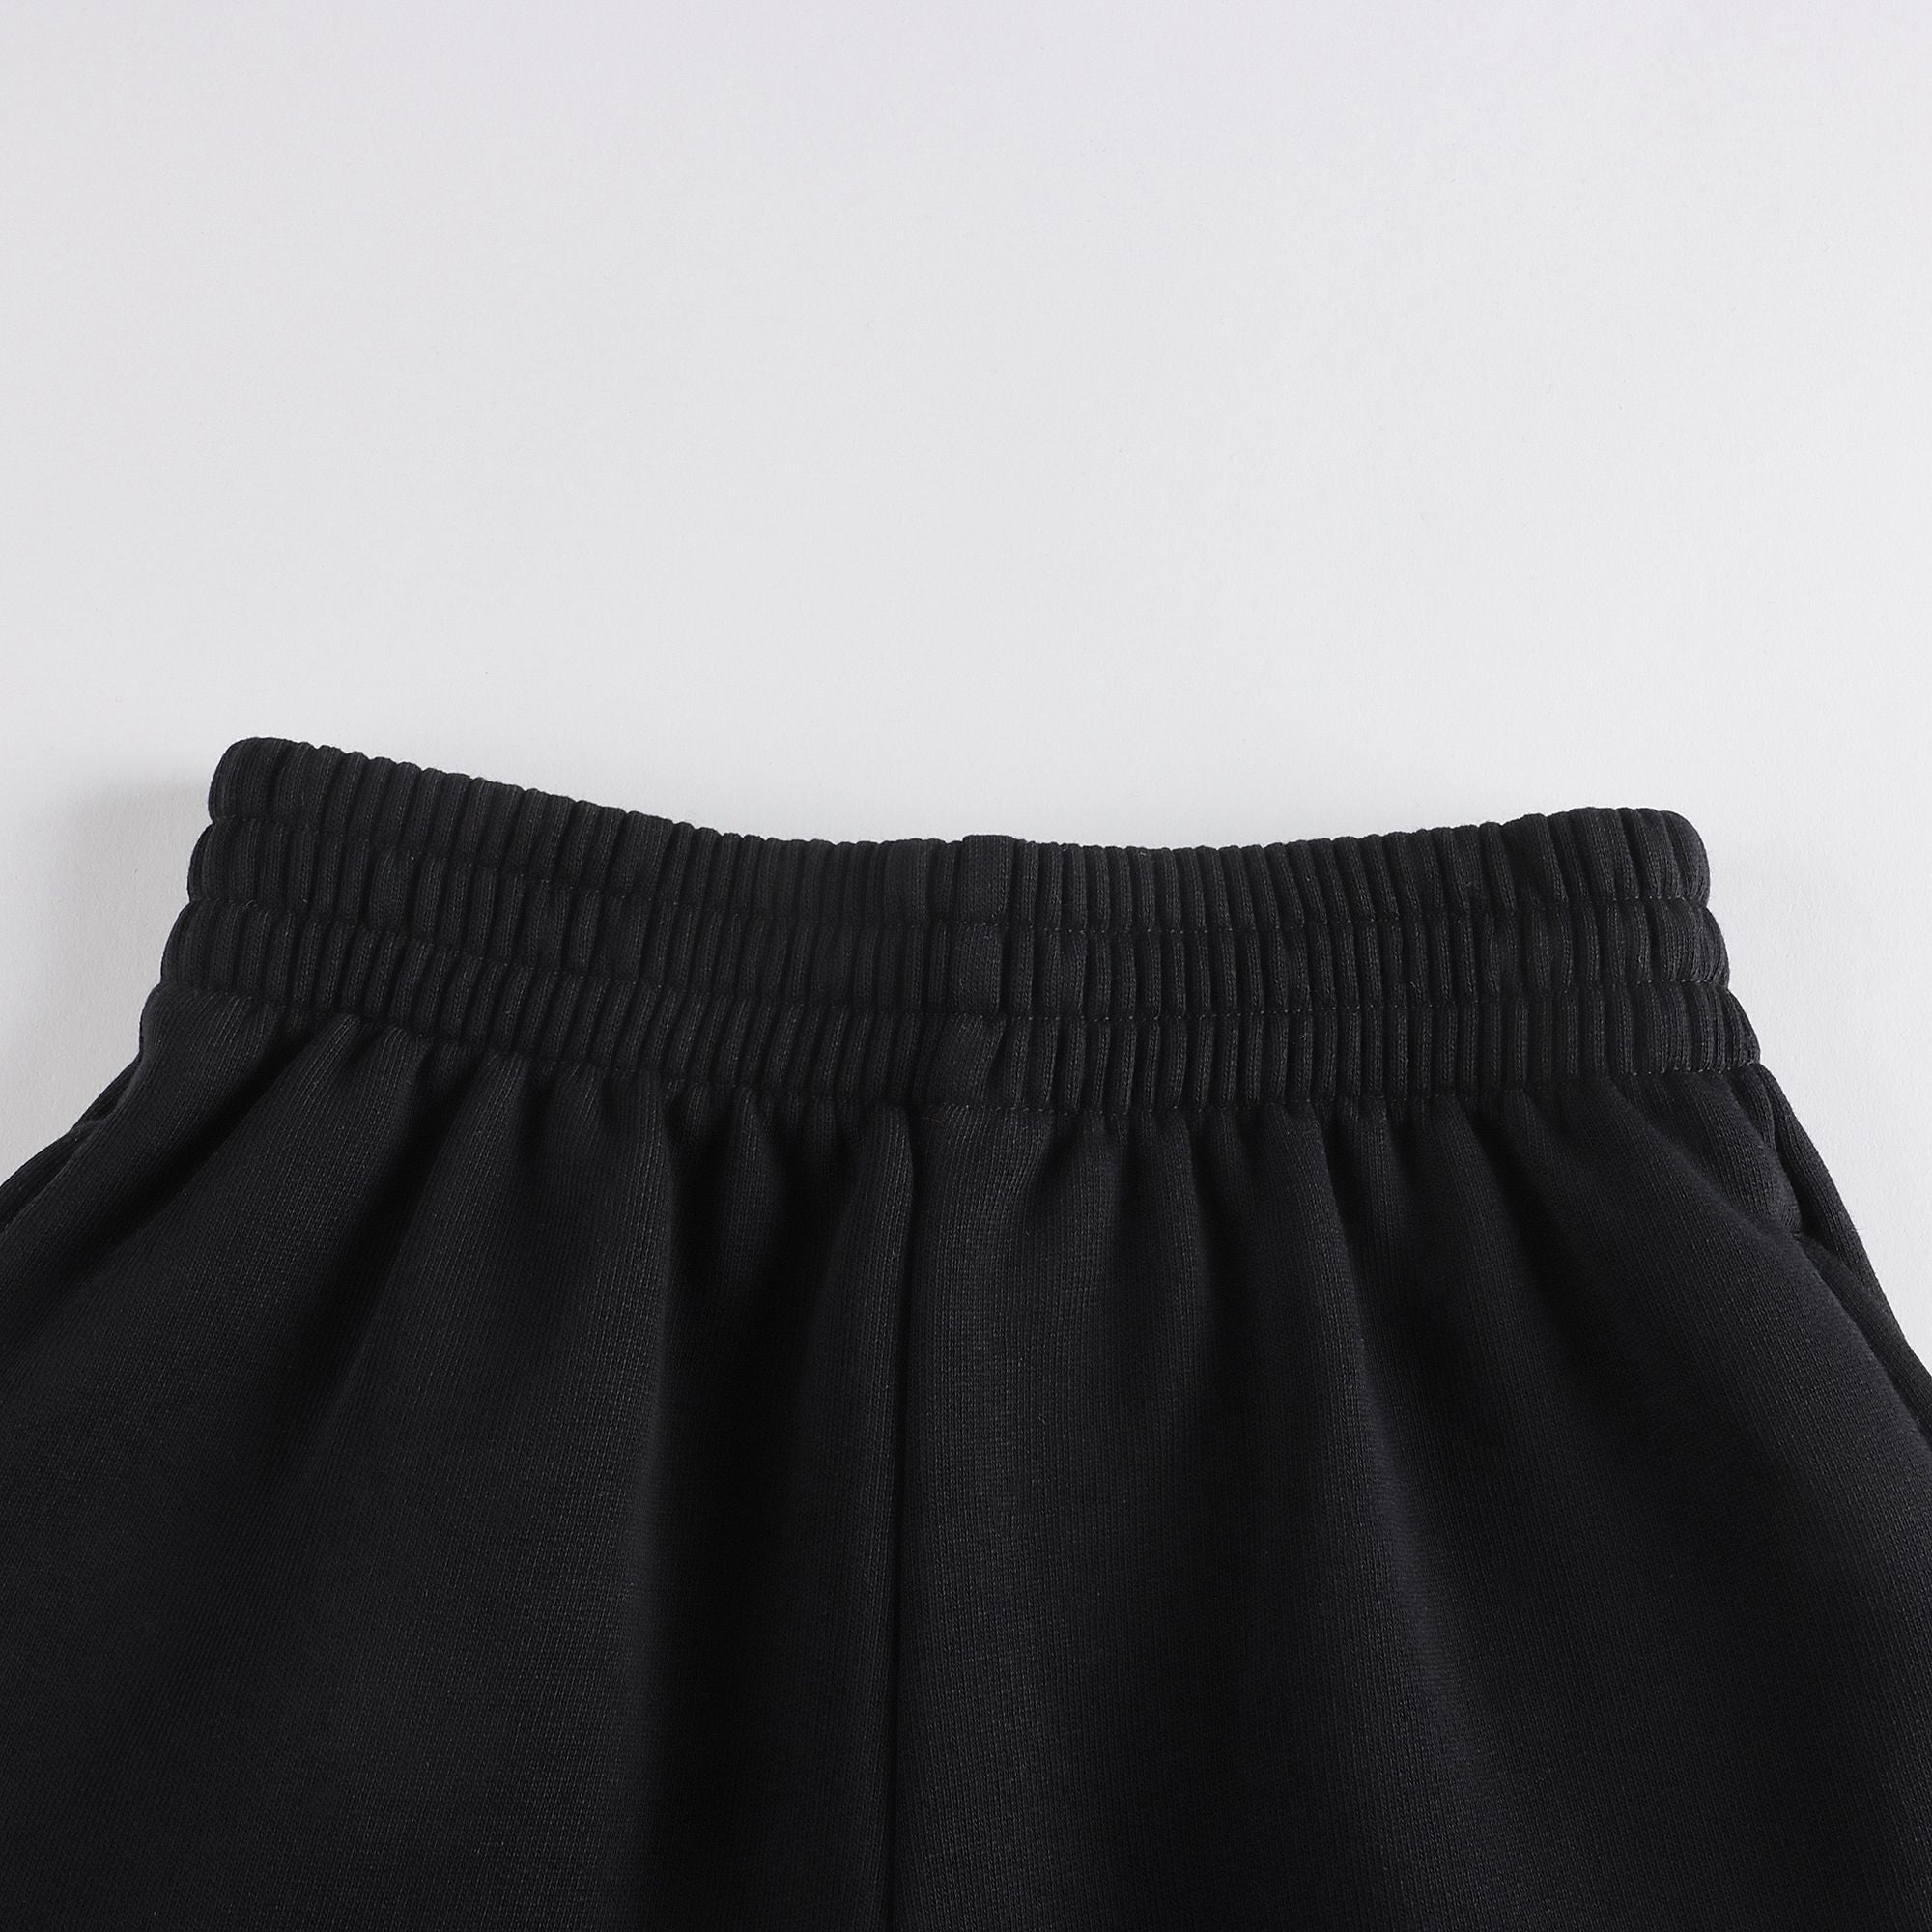 Boys & Girls Black Cotton Shorts